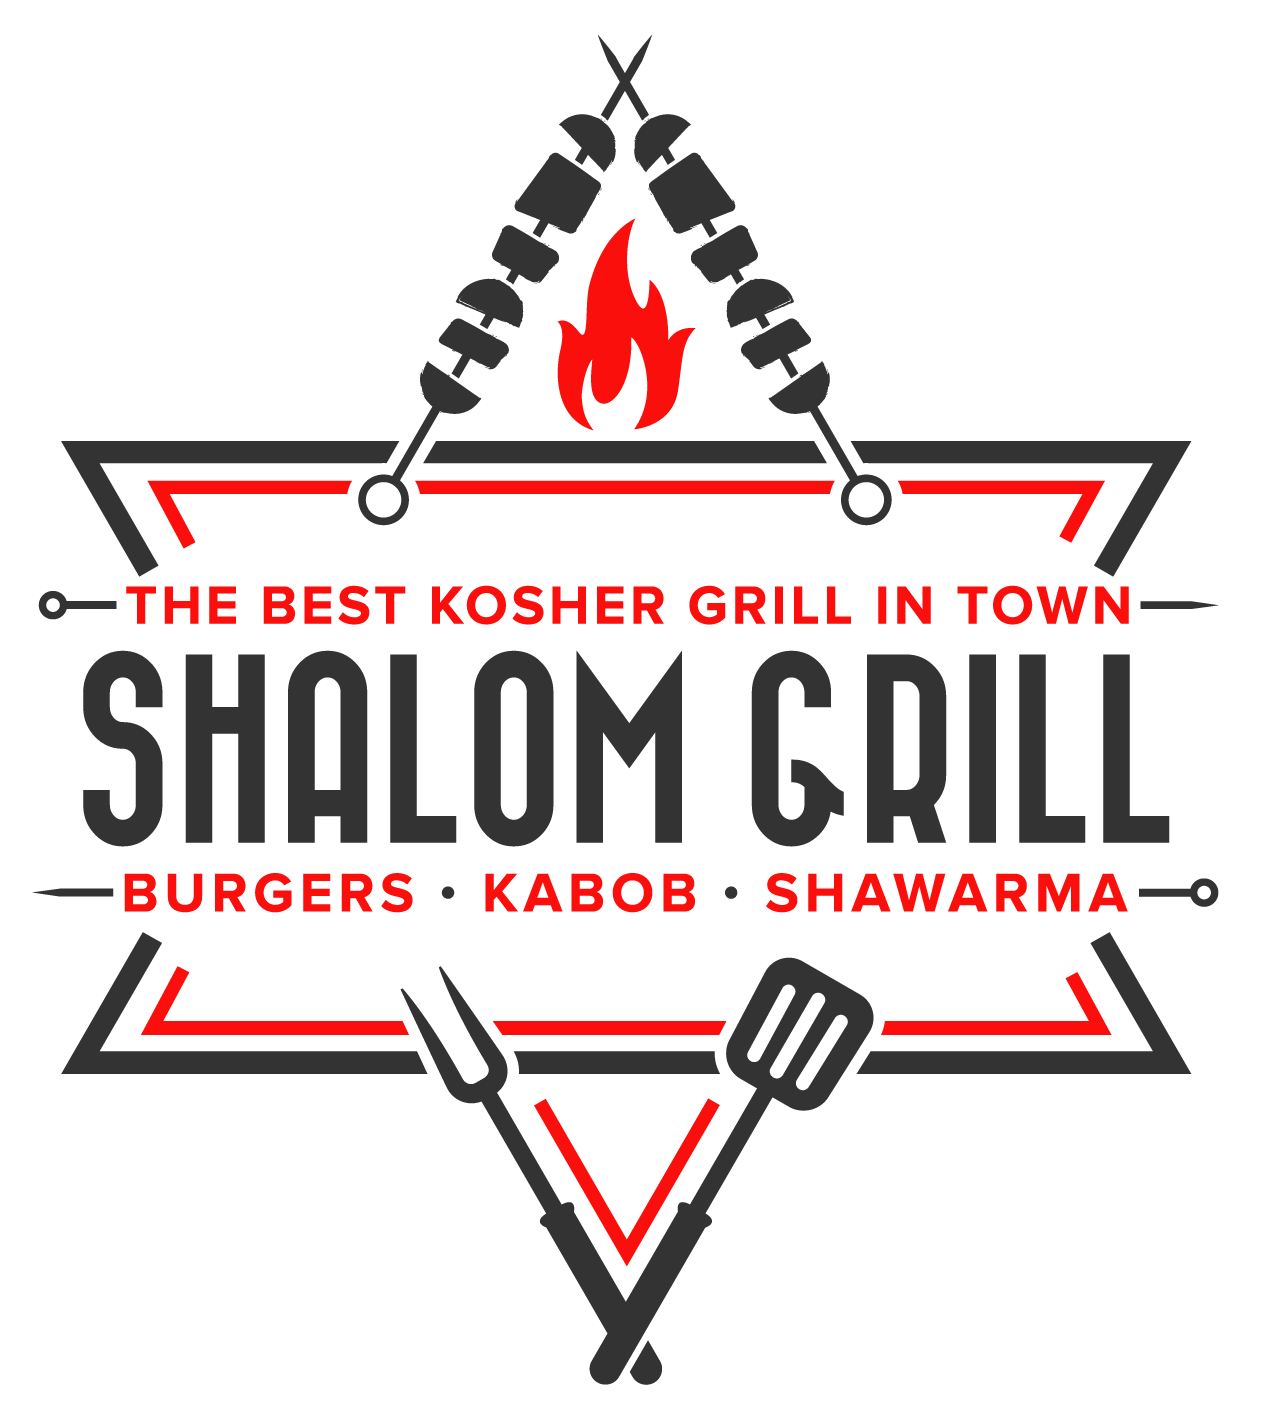 Shalom Grill Logo